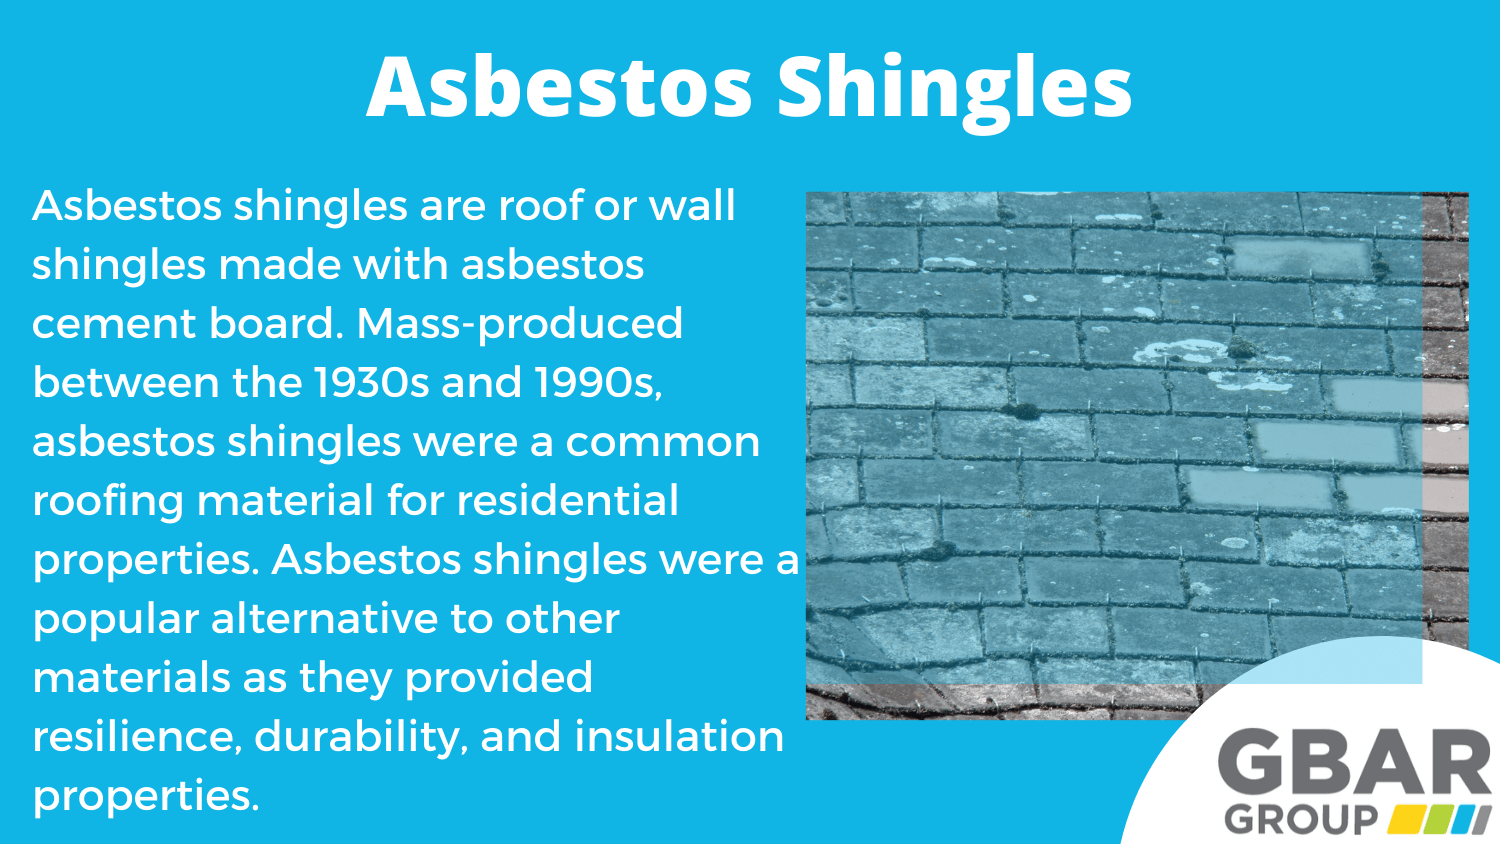 asbestos shingles removal cost